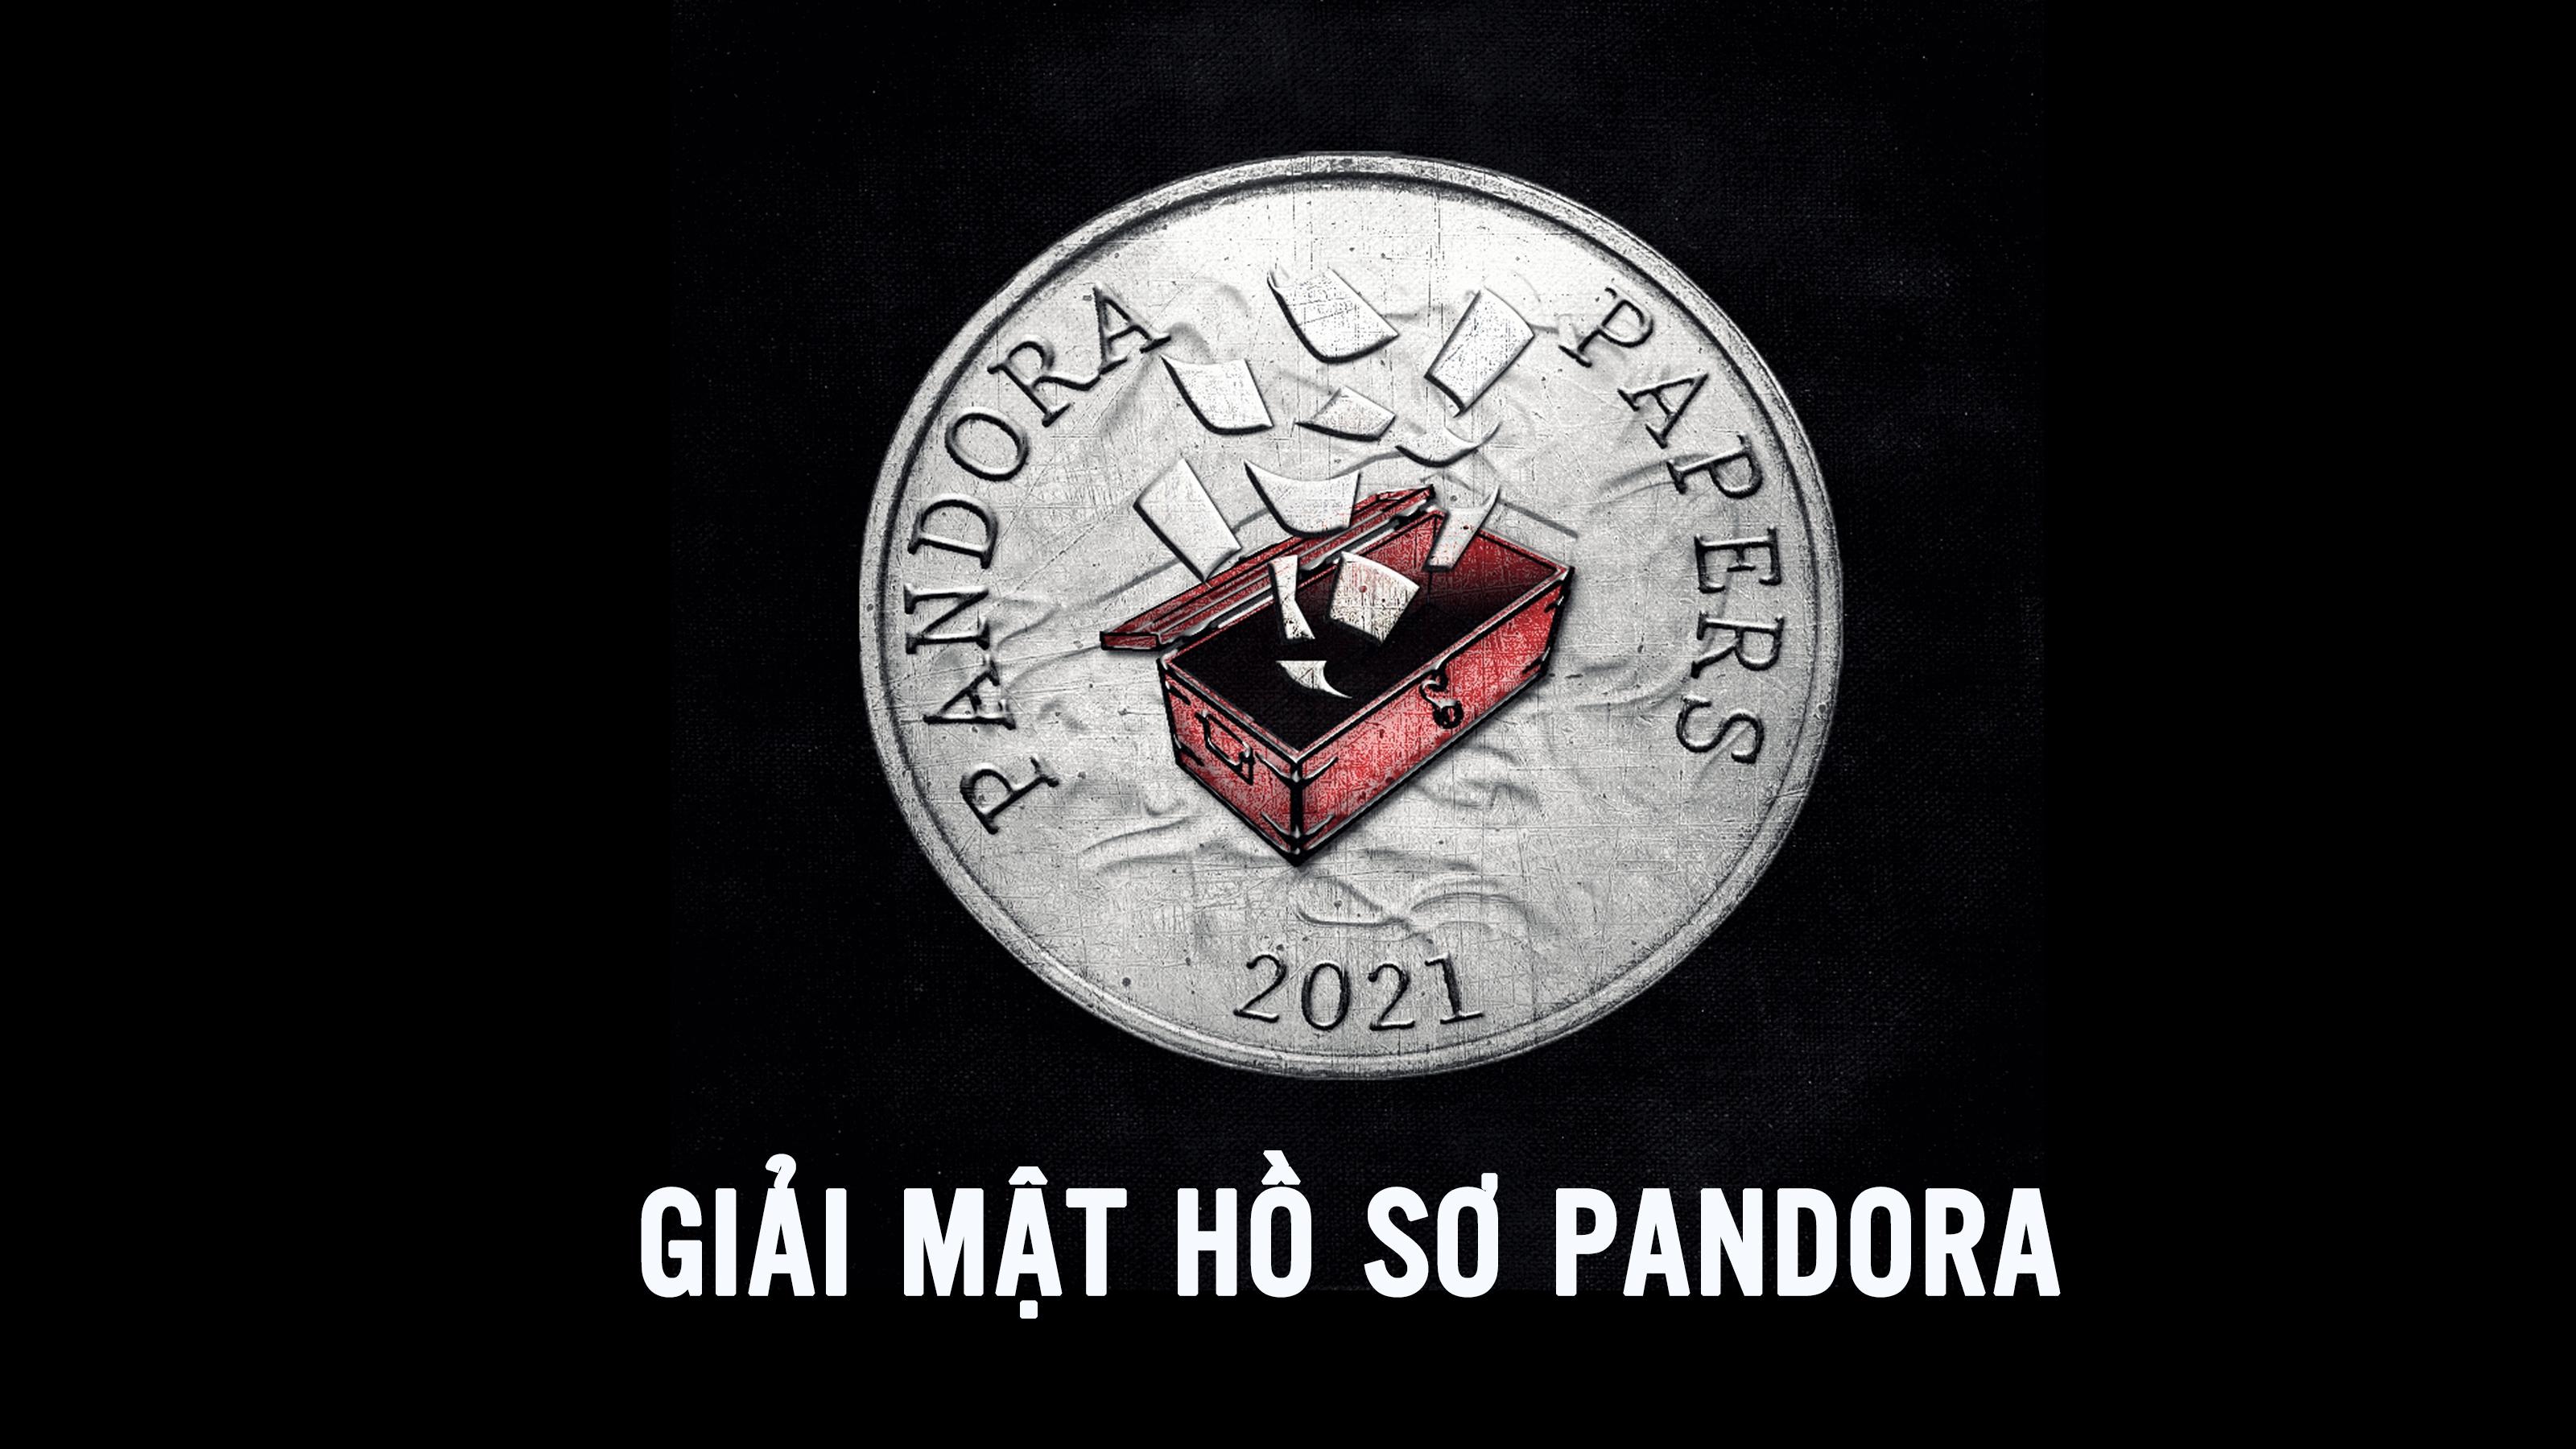 Giải mật Hồ sơ Pandora 